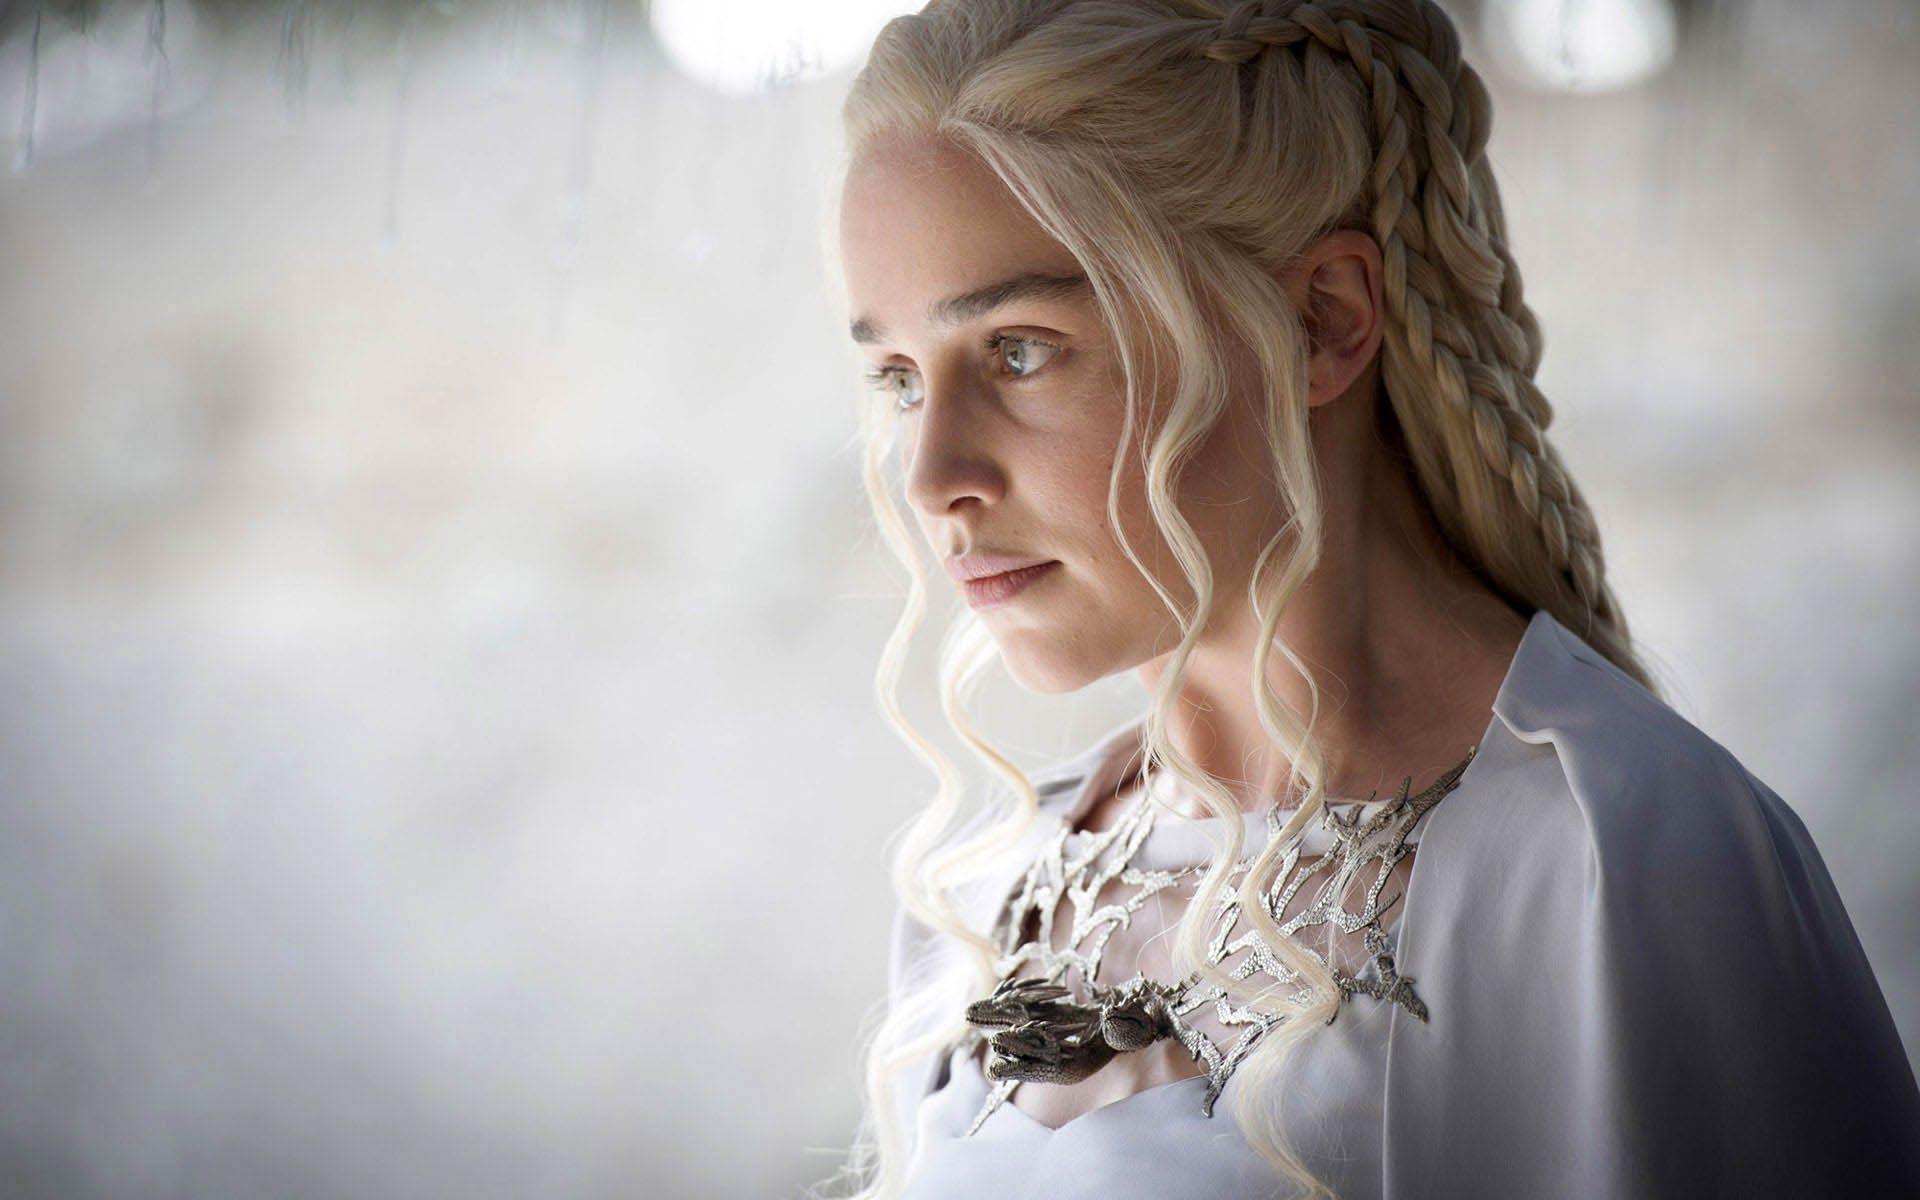 Emilia Clarke as Daenerys Targaryen of Thrones